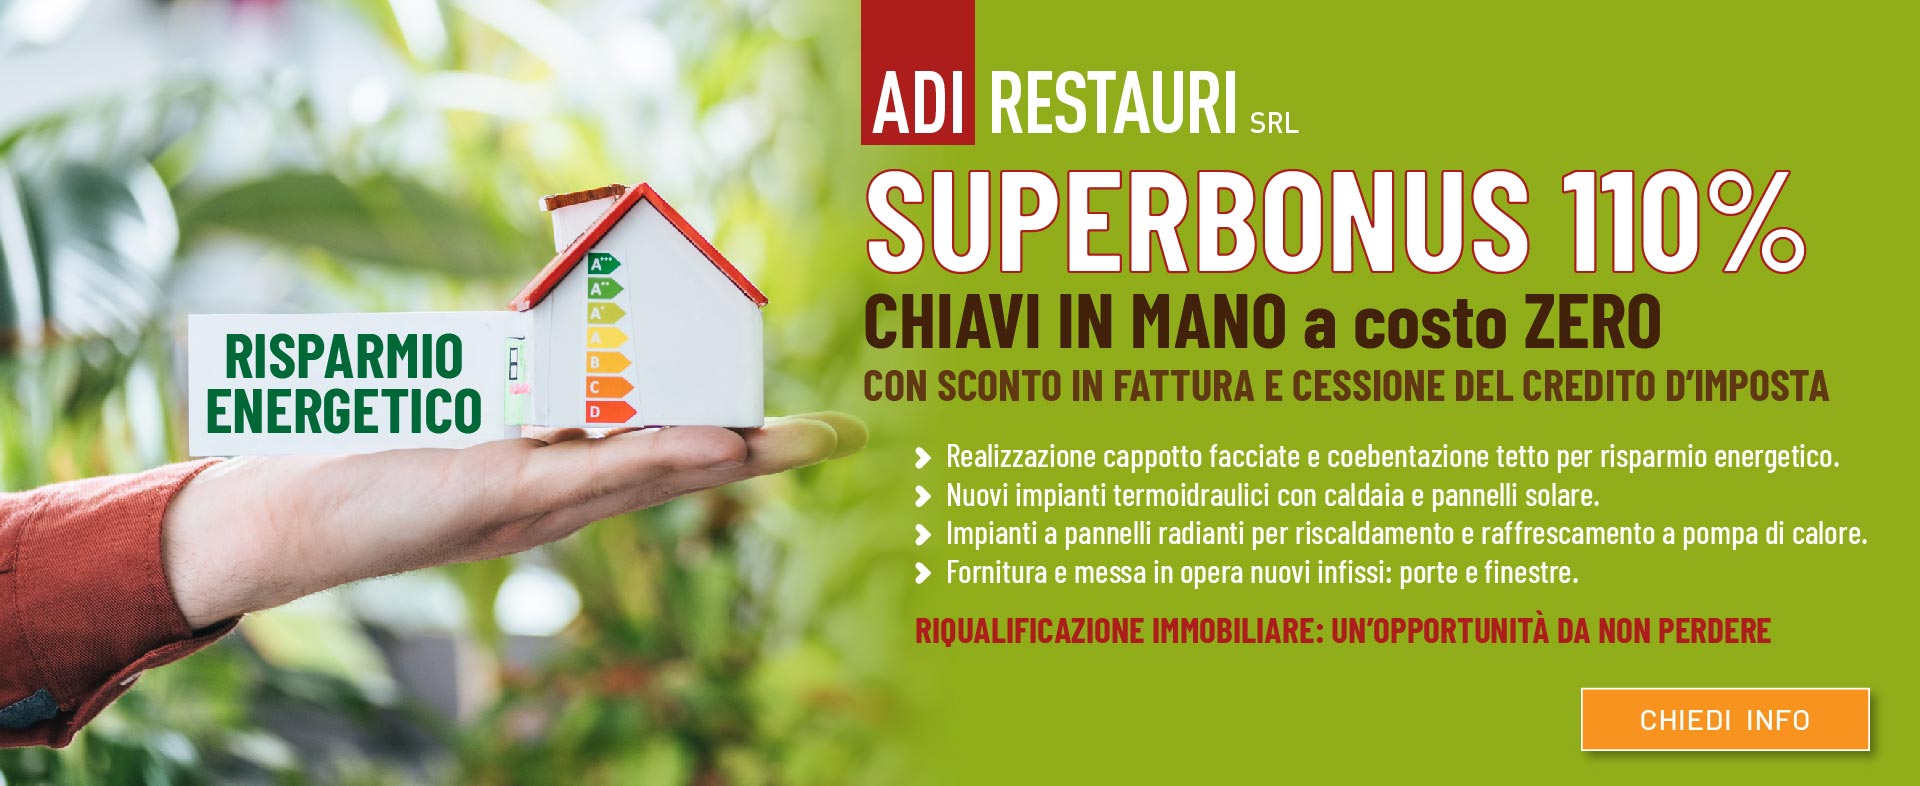 SuperBonus 110% Firenze - ADI RESTAURI srl